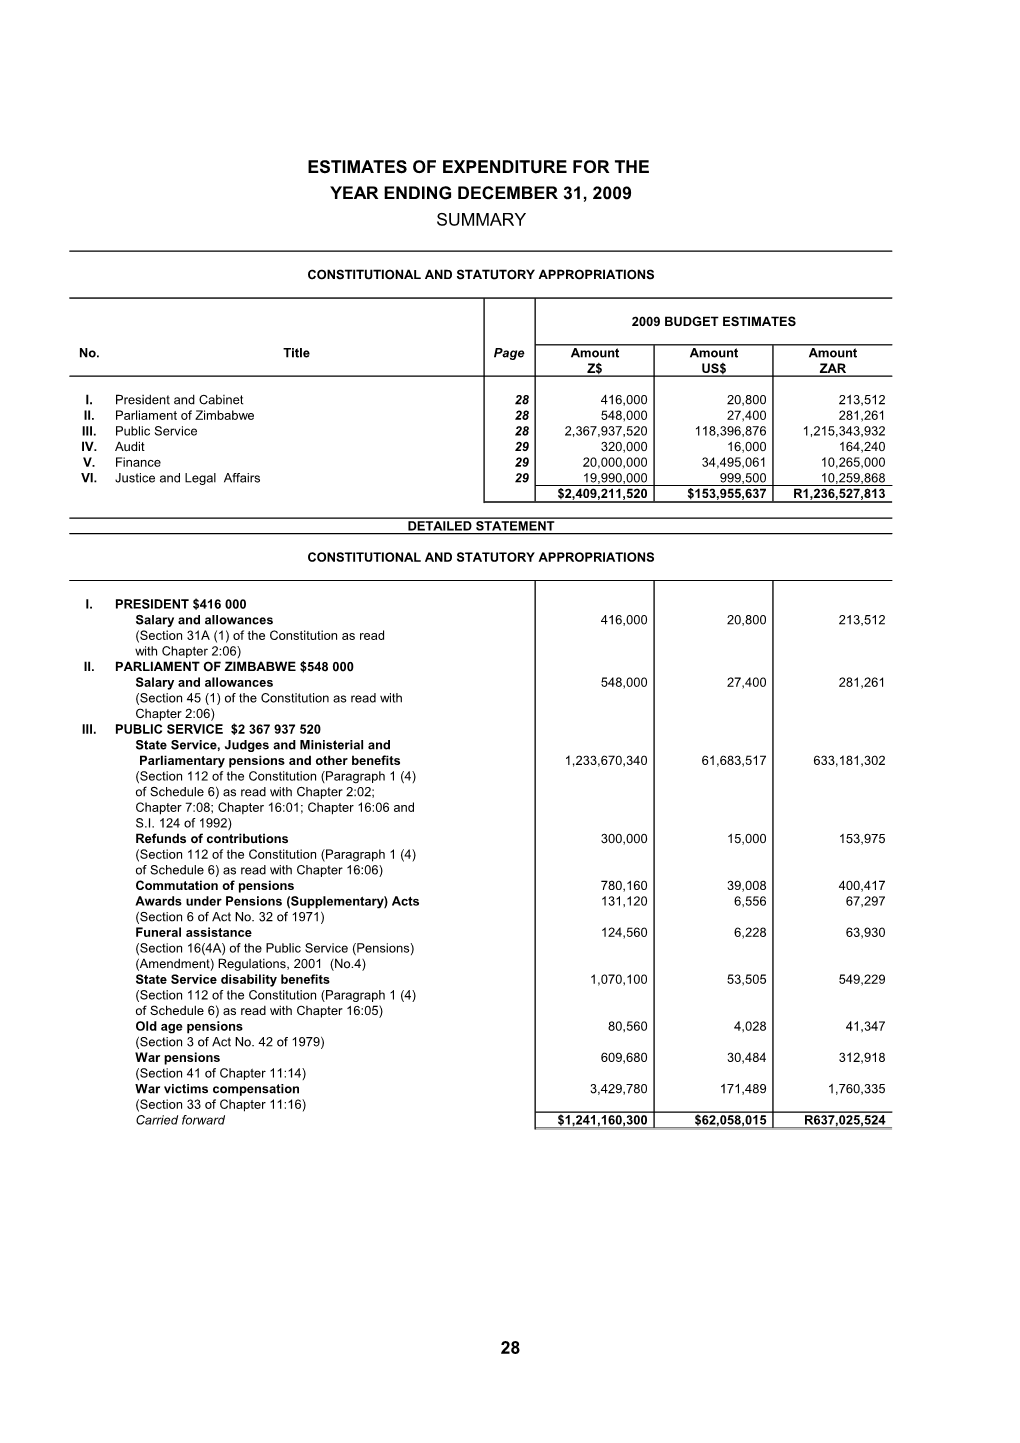 Year Ending December 31, 2009 Estimates of Expenditure